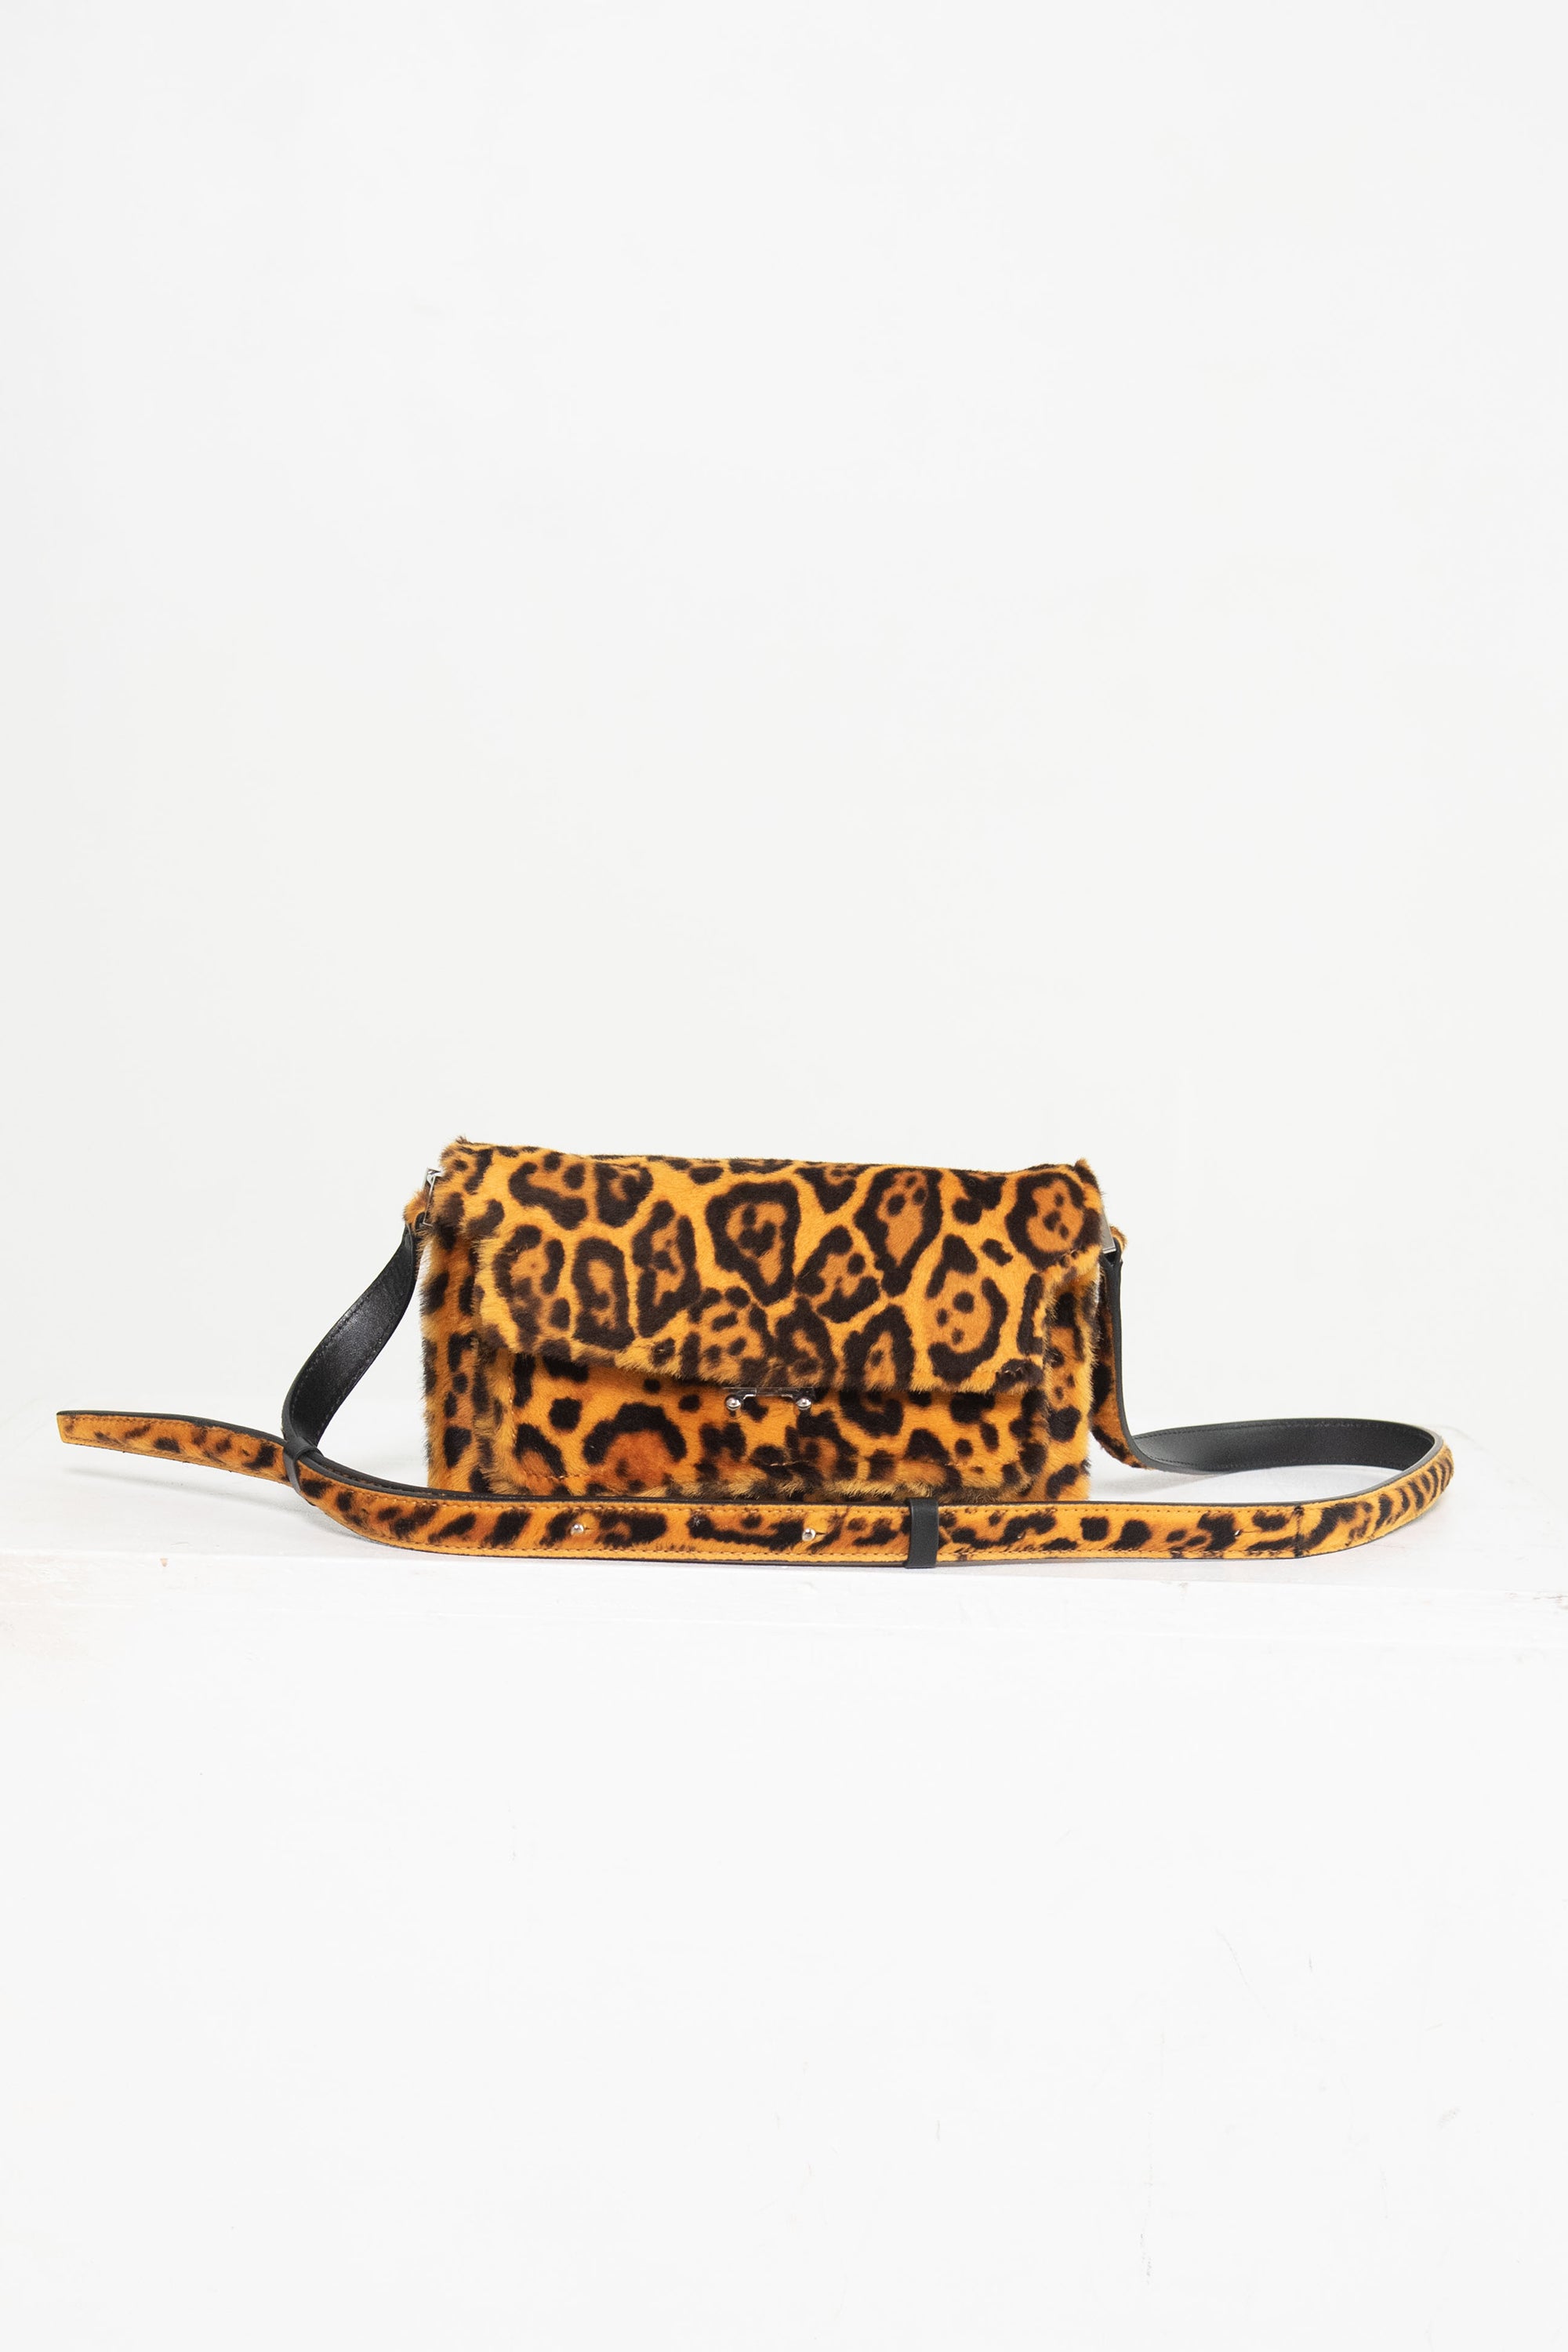 Marni EW Trunk Bag, Leopard